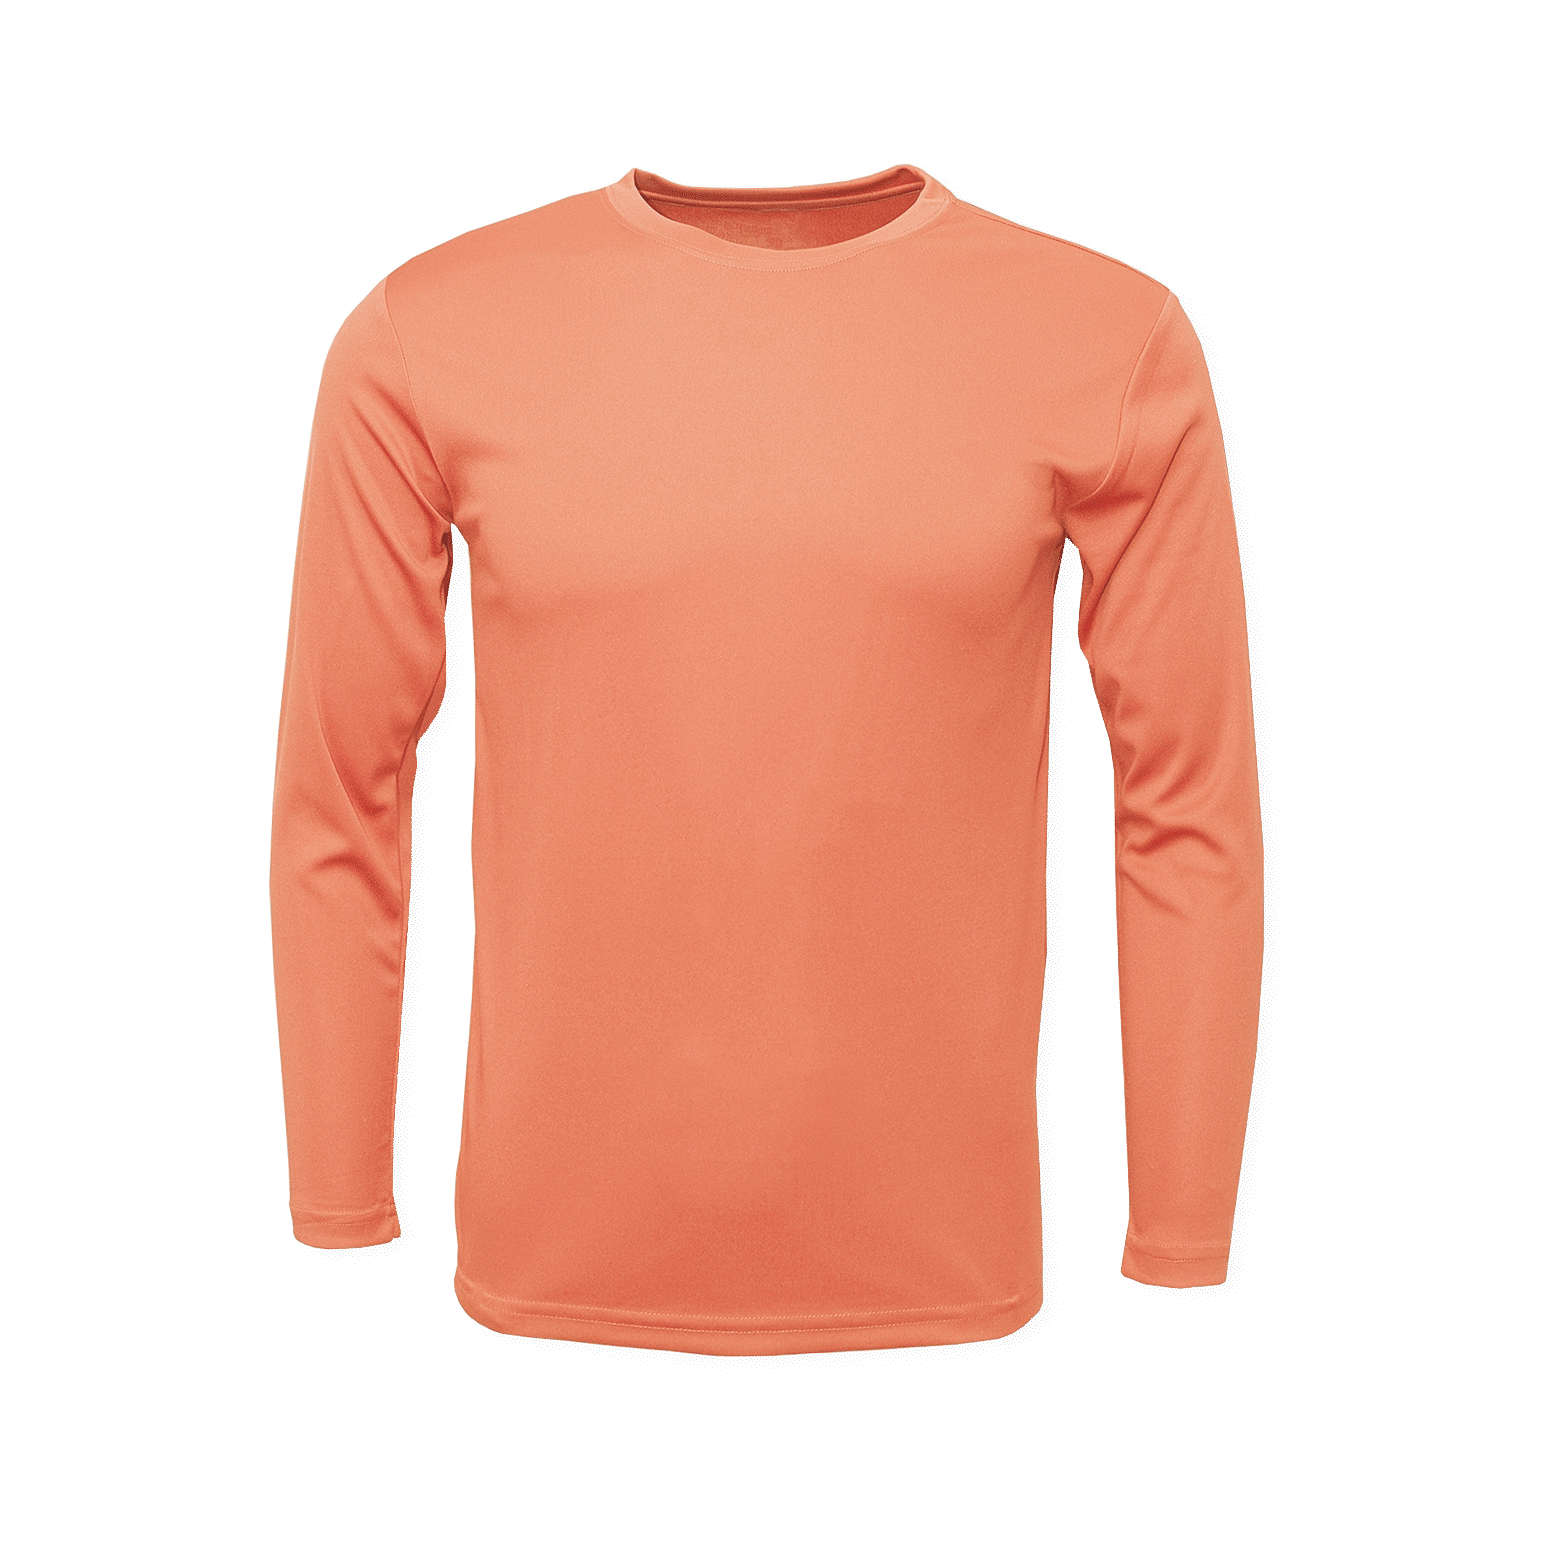 Columbia Orange Long Sleeve Fishing Shirts & Tops for sale